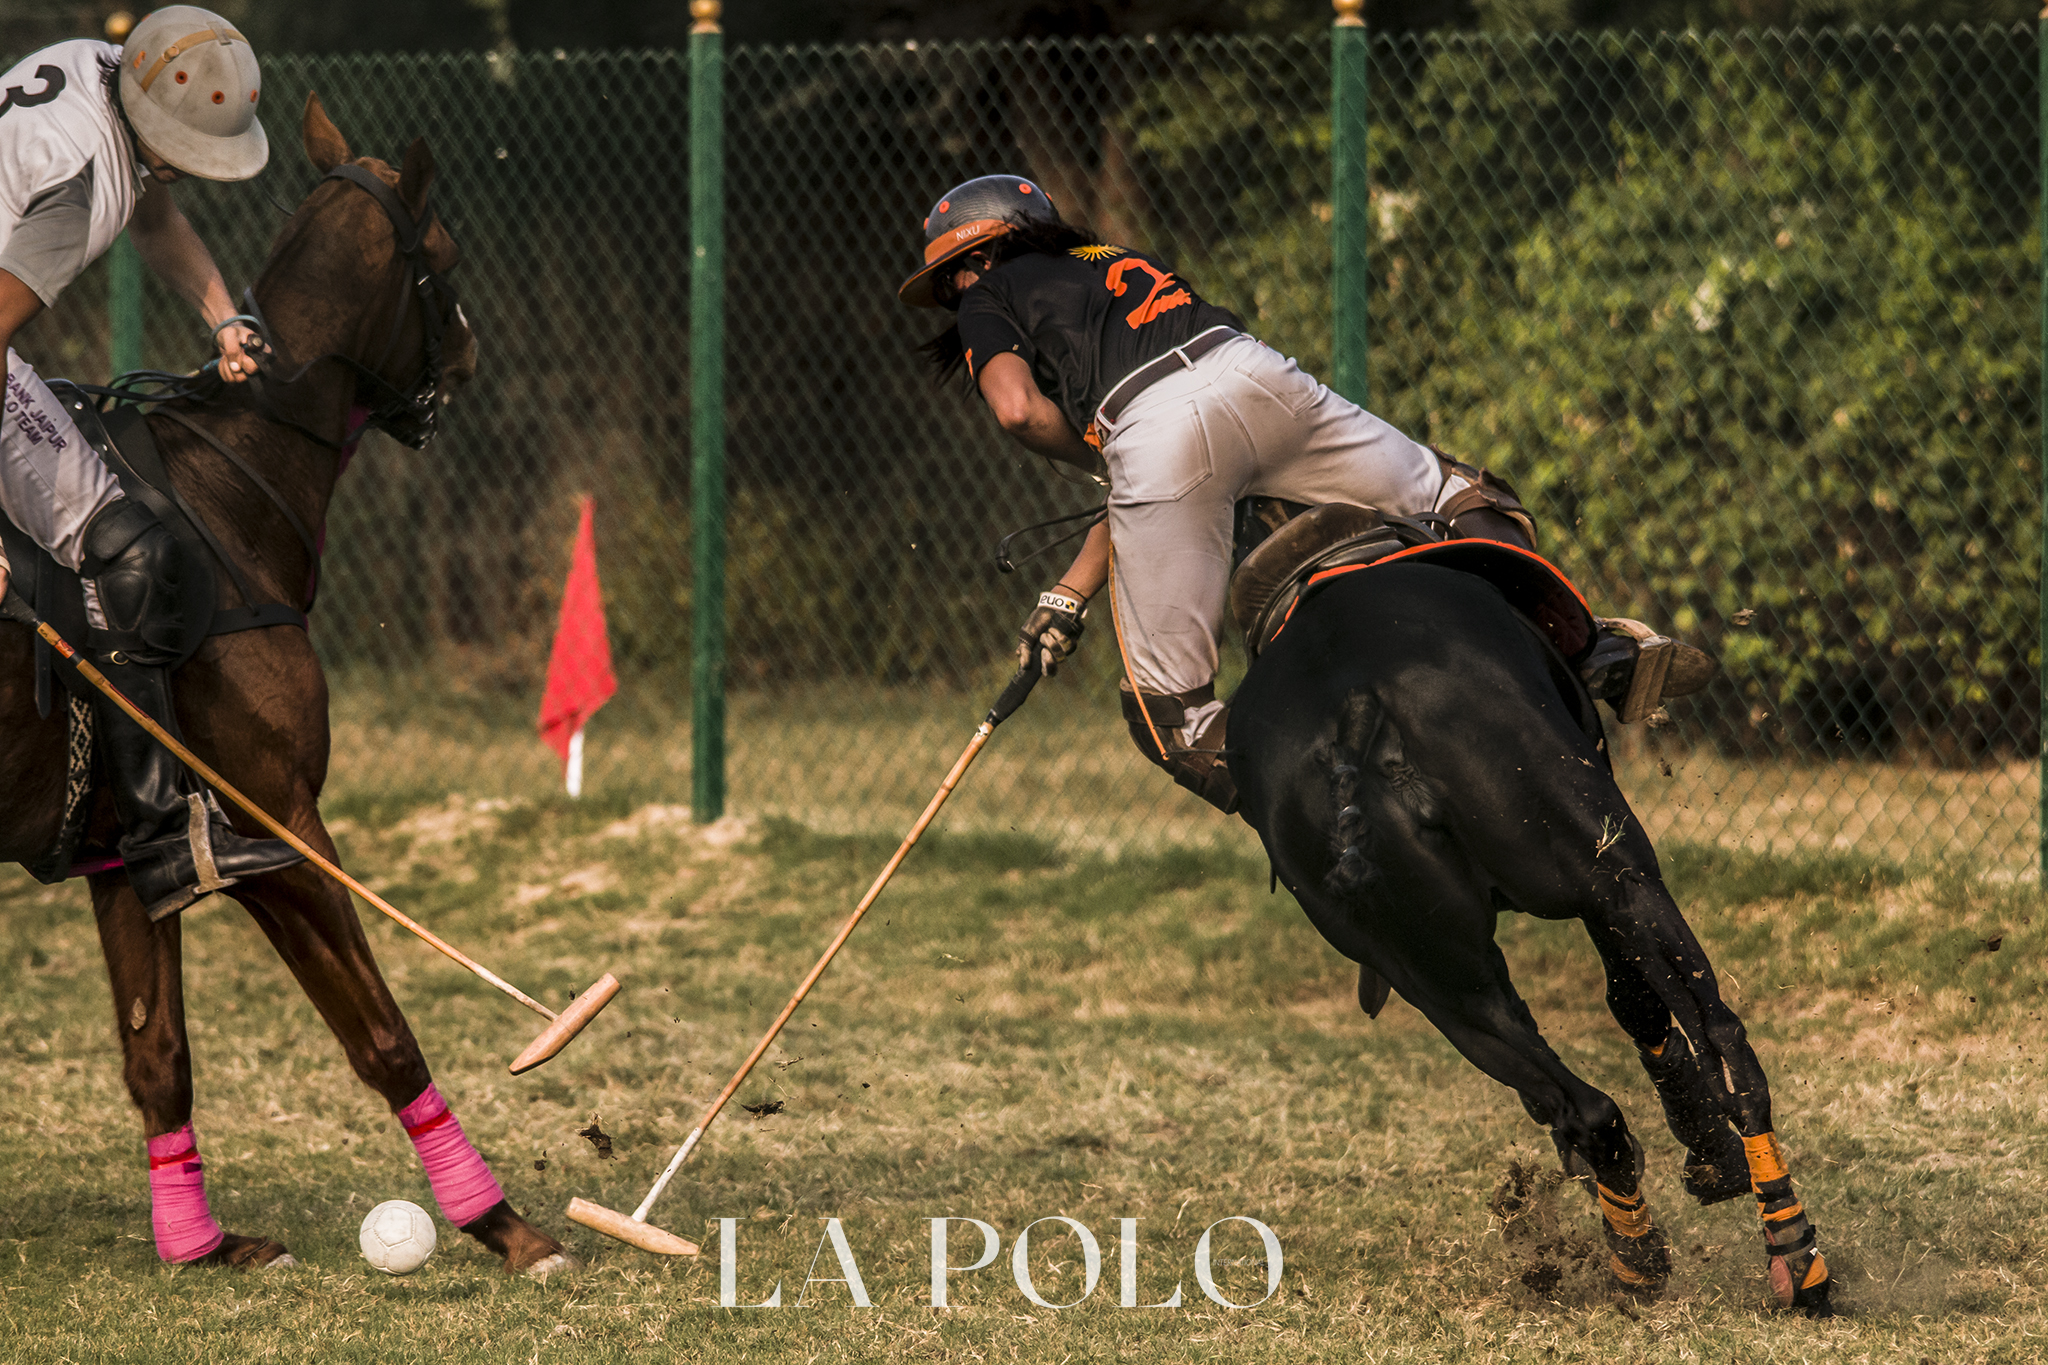 polo-in-jodhpur-arena-polo-types-of-polo-lapolo